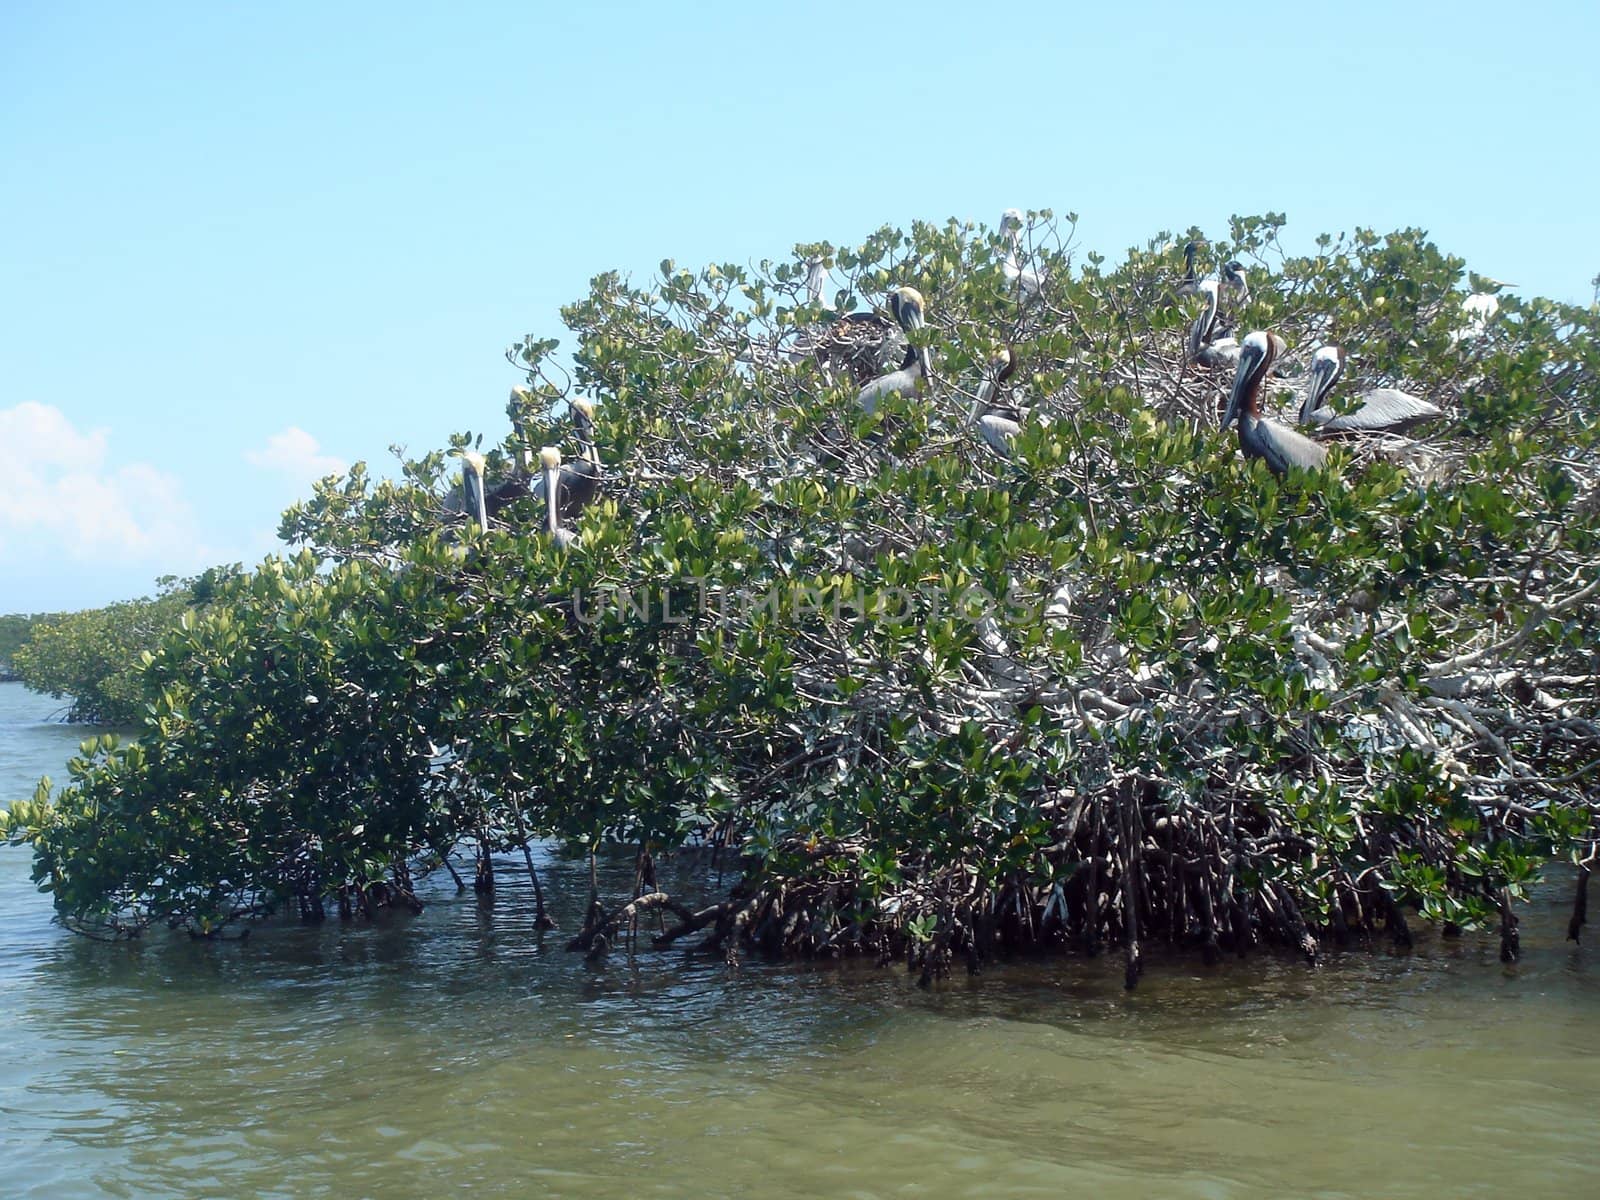 Pelicans on mangrove tree by Elenaphotos21